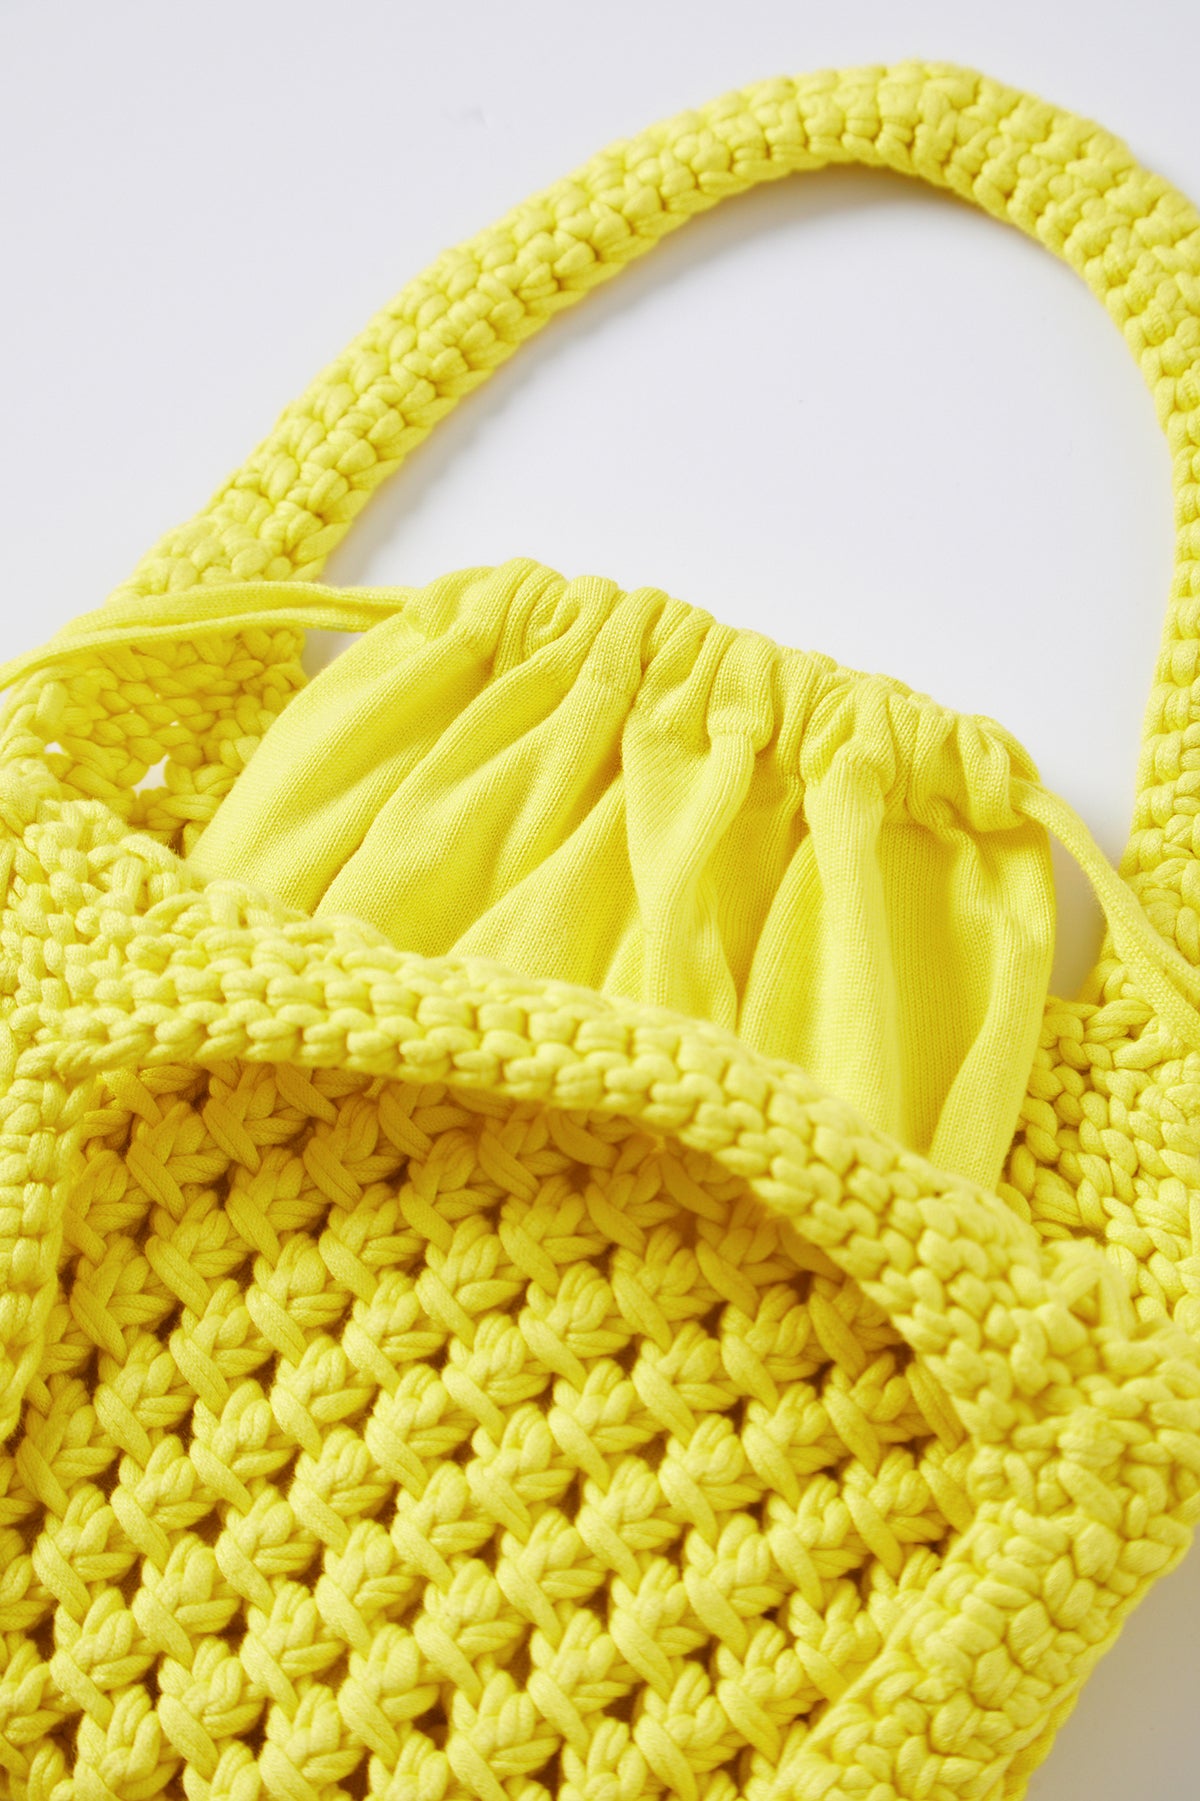 Smartest Way to Crochet a Bag - Crochet Kingdom